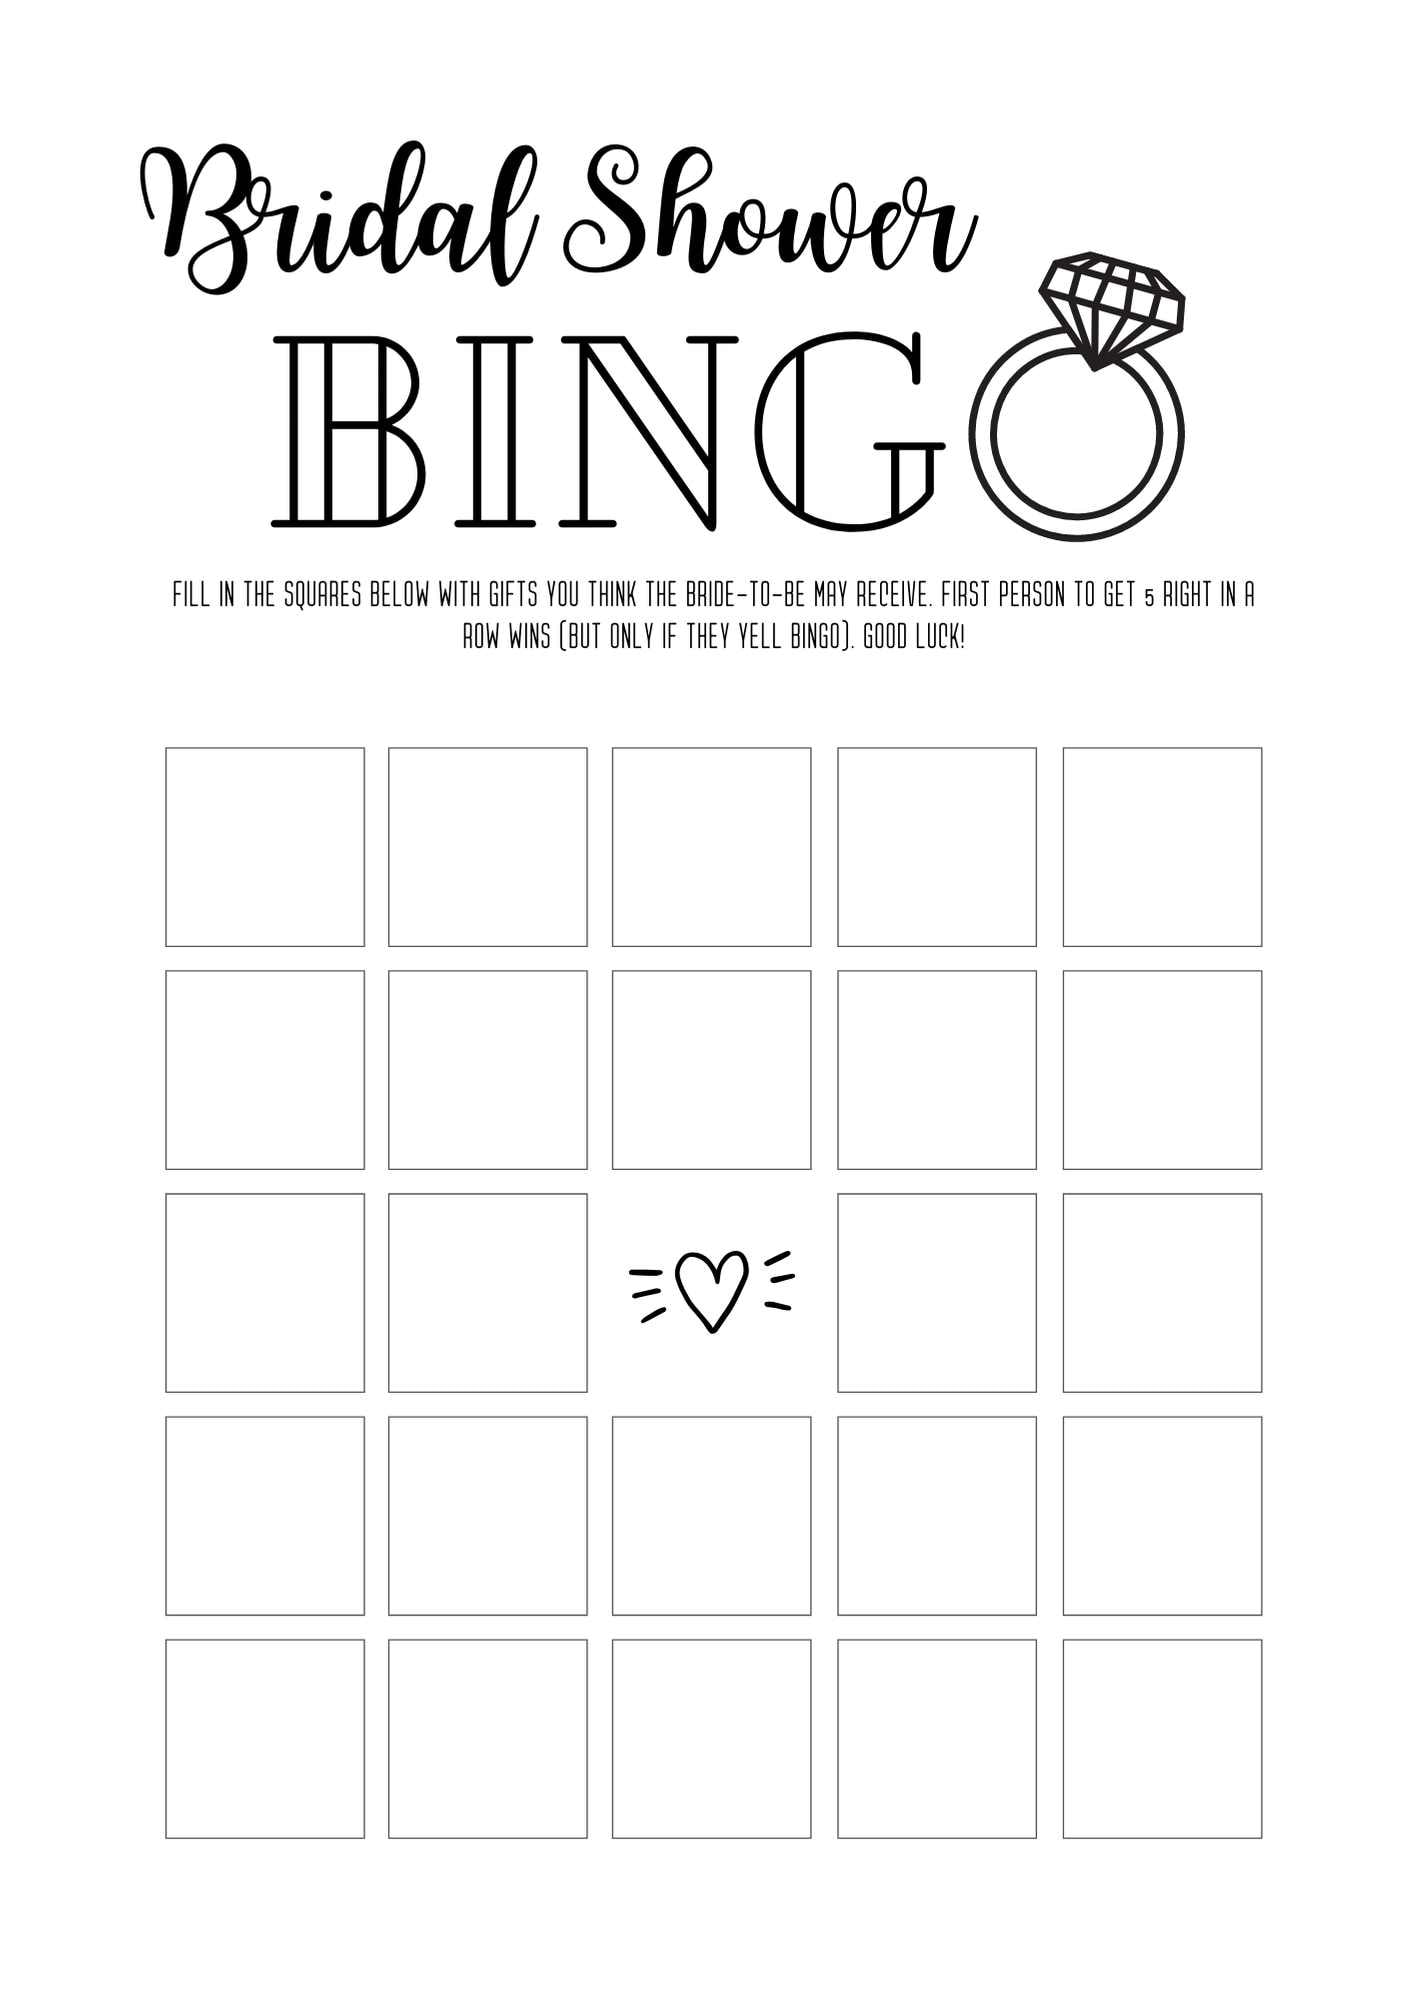 Bridal Shower Bingo Printable How To Play Bridal Shower Bingo